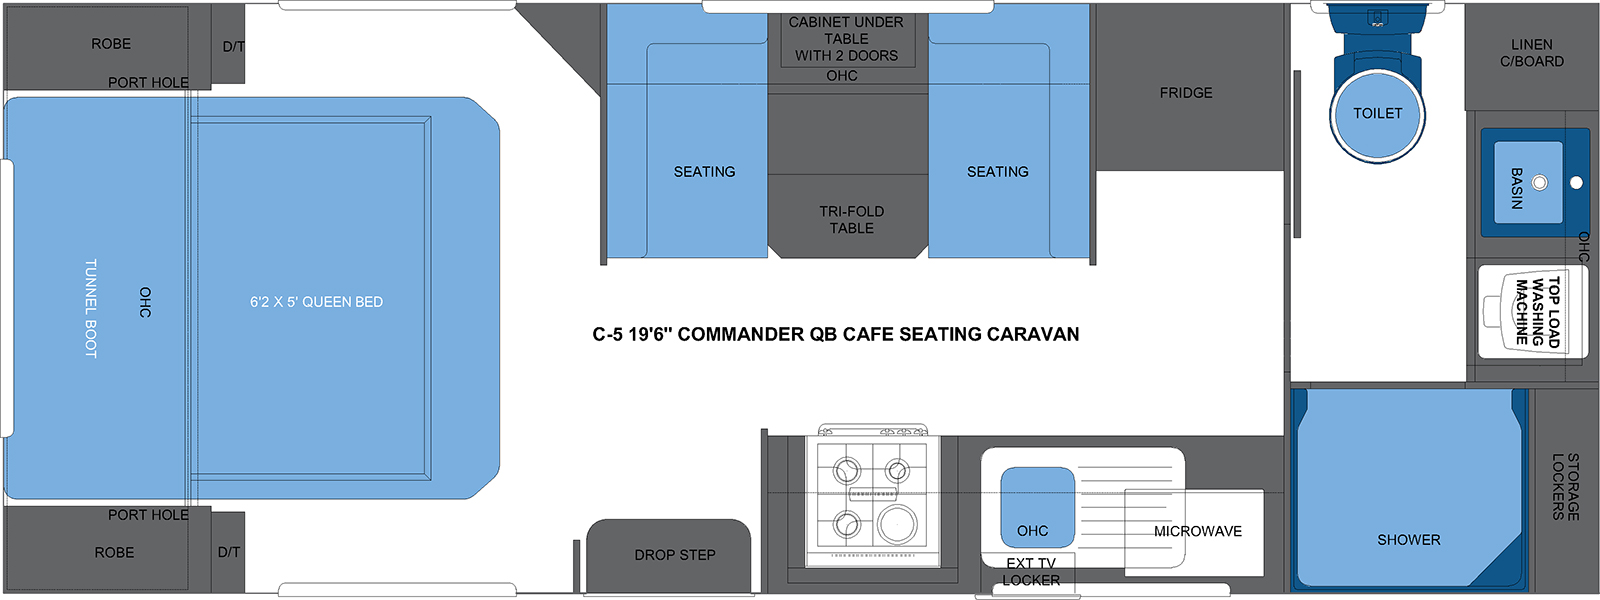 C-5 19'6 COMMANDER QB CAFE SEATING CARAVAN